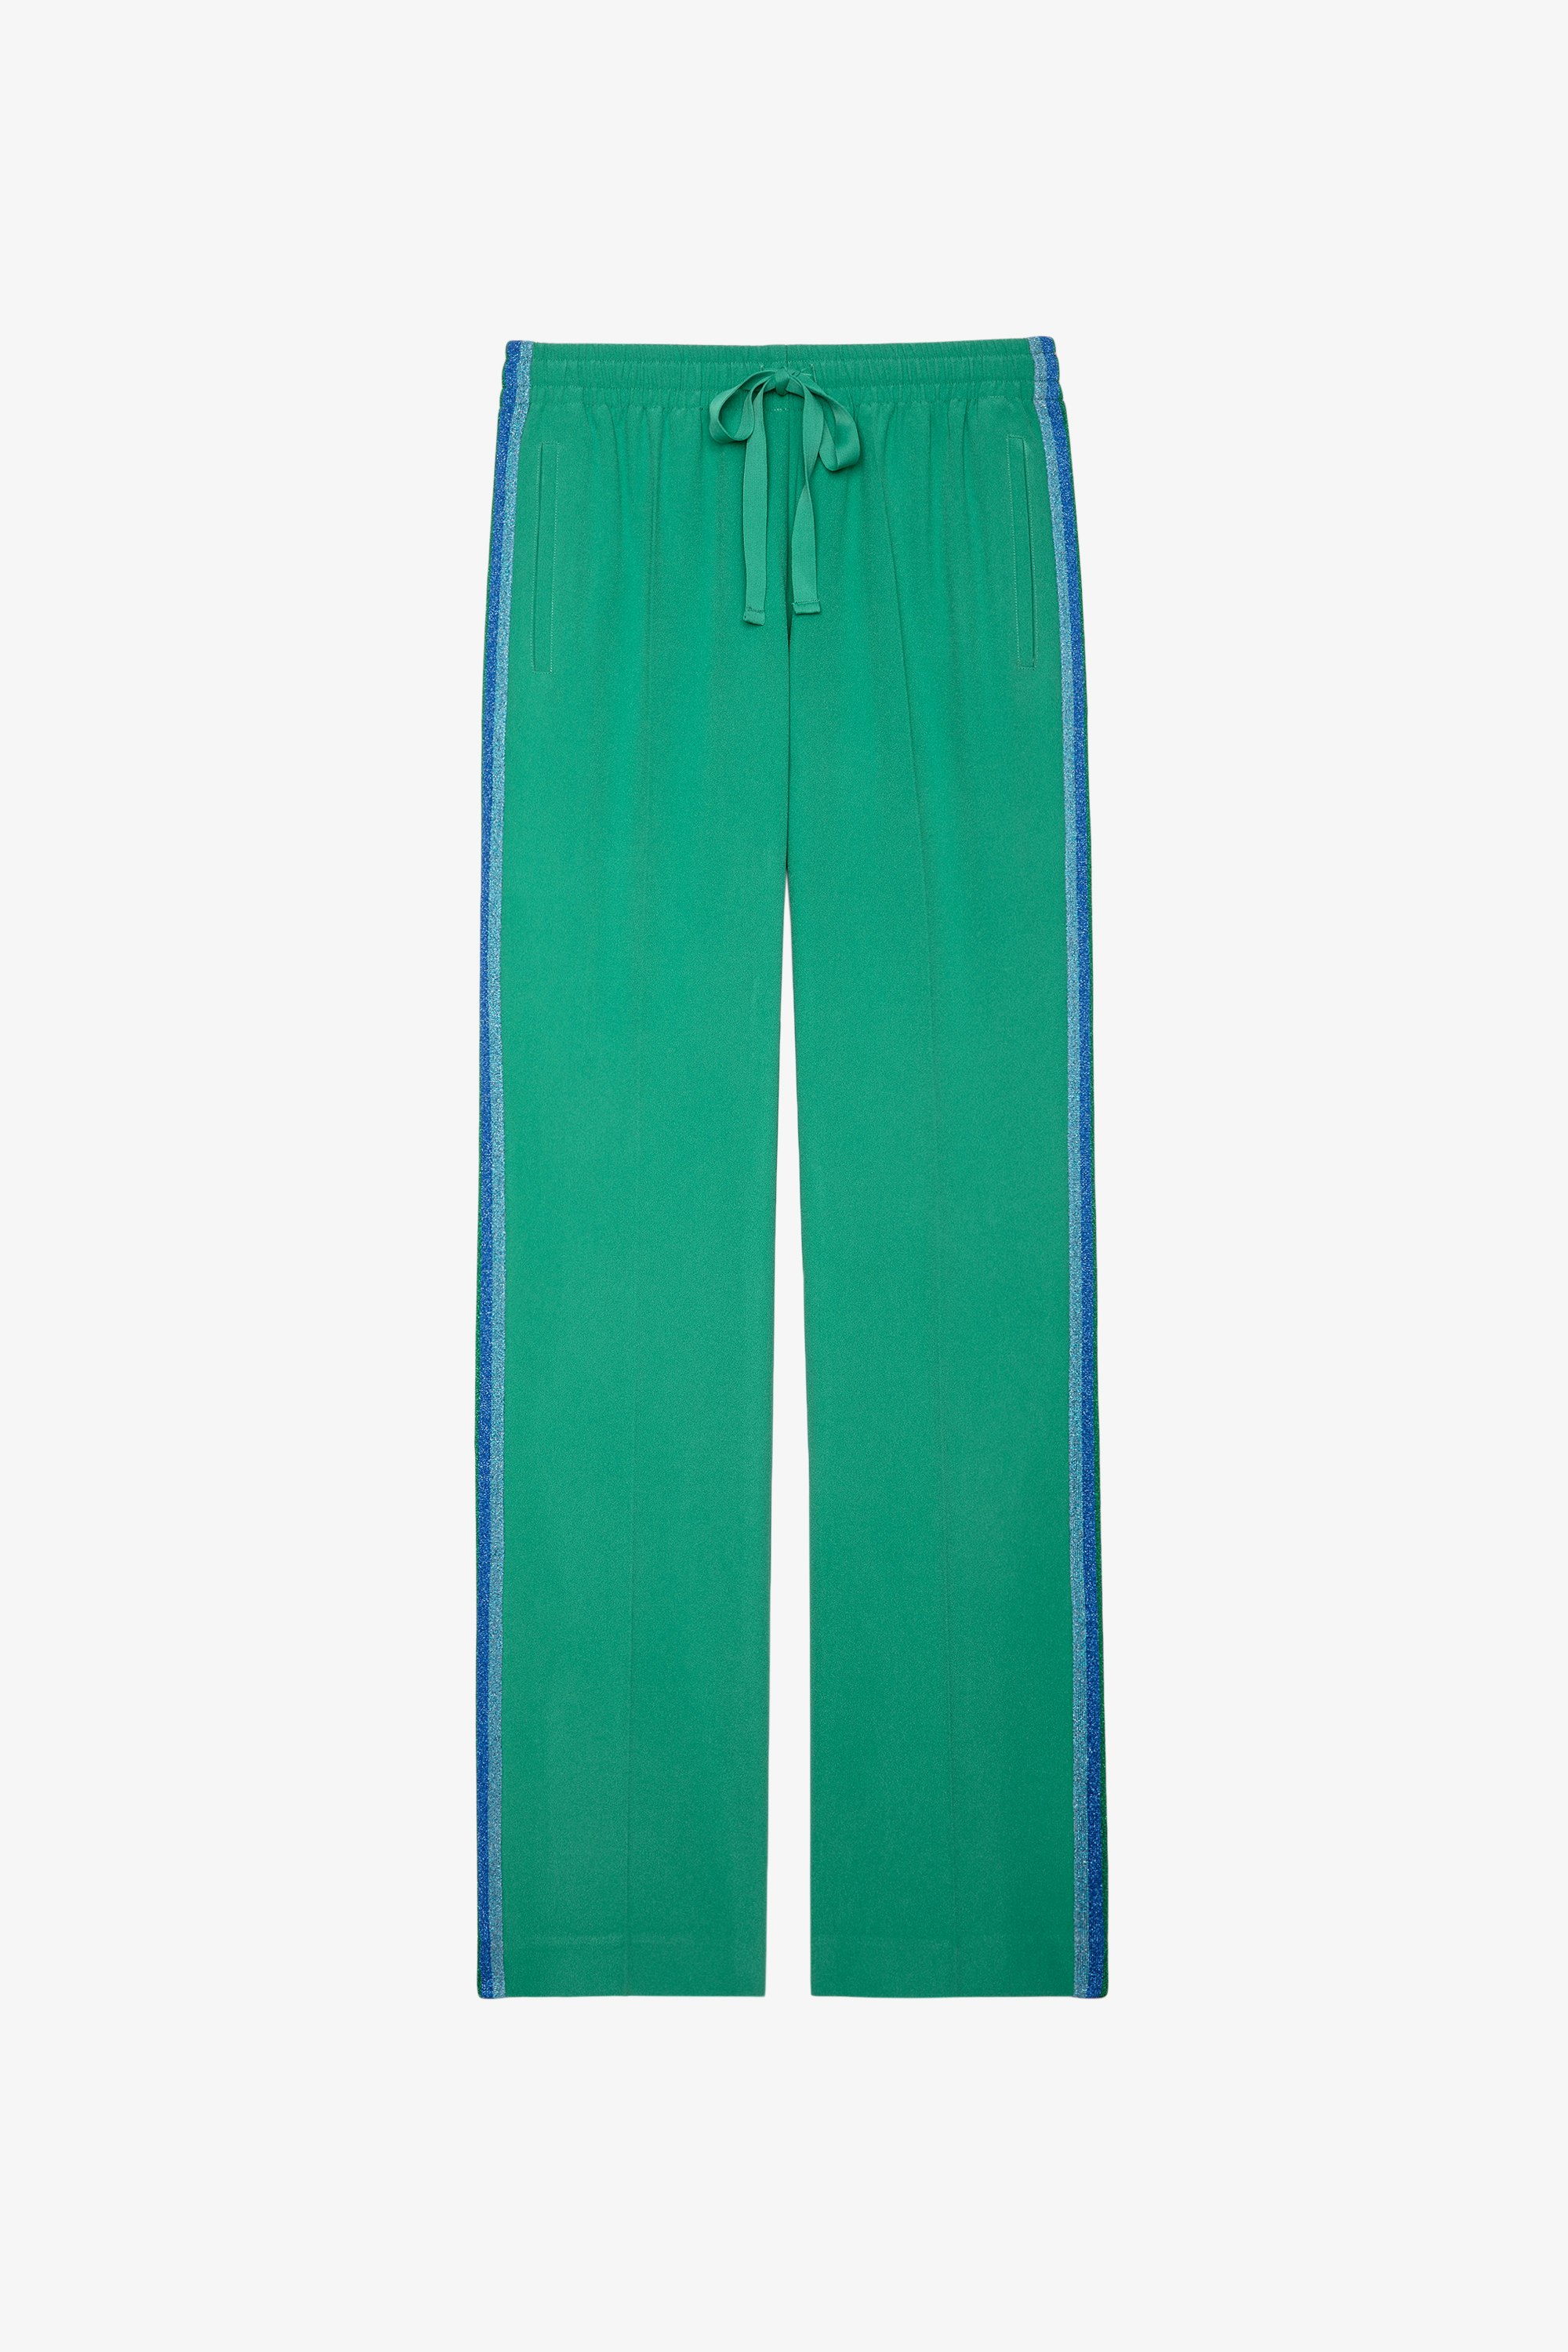 Pantalon Pomy crepe Pantalon fluide vert à bandes latérales glitter Femme